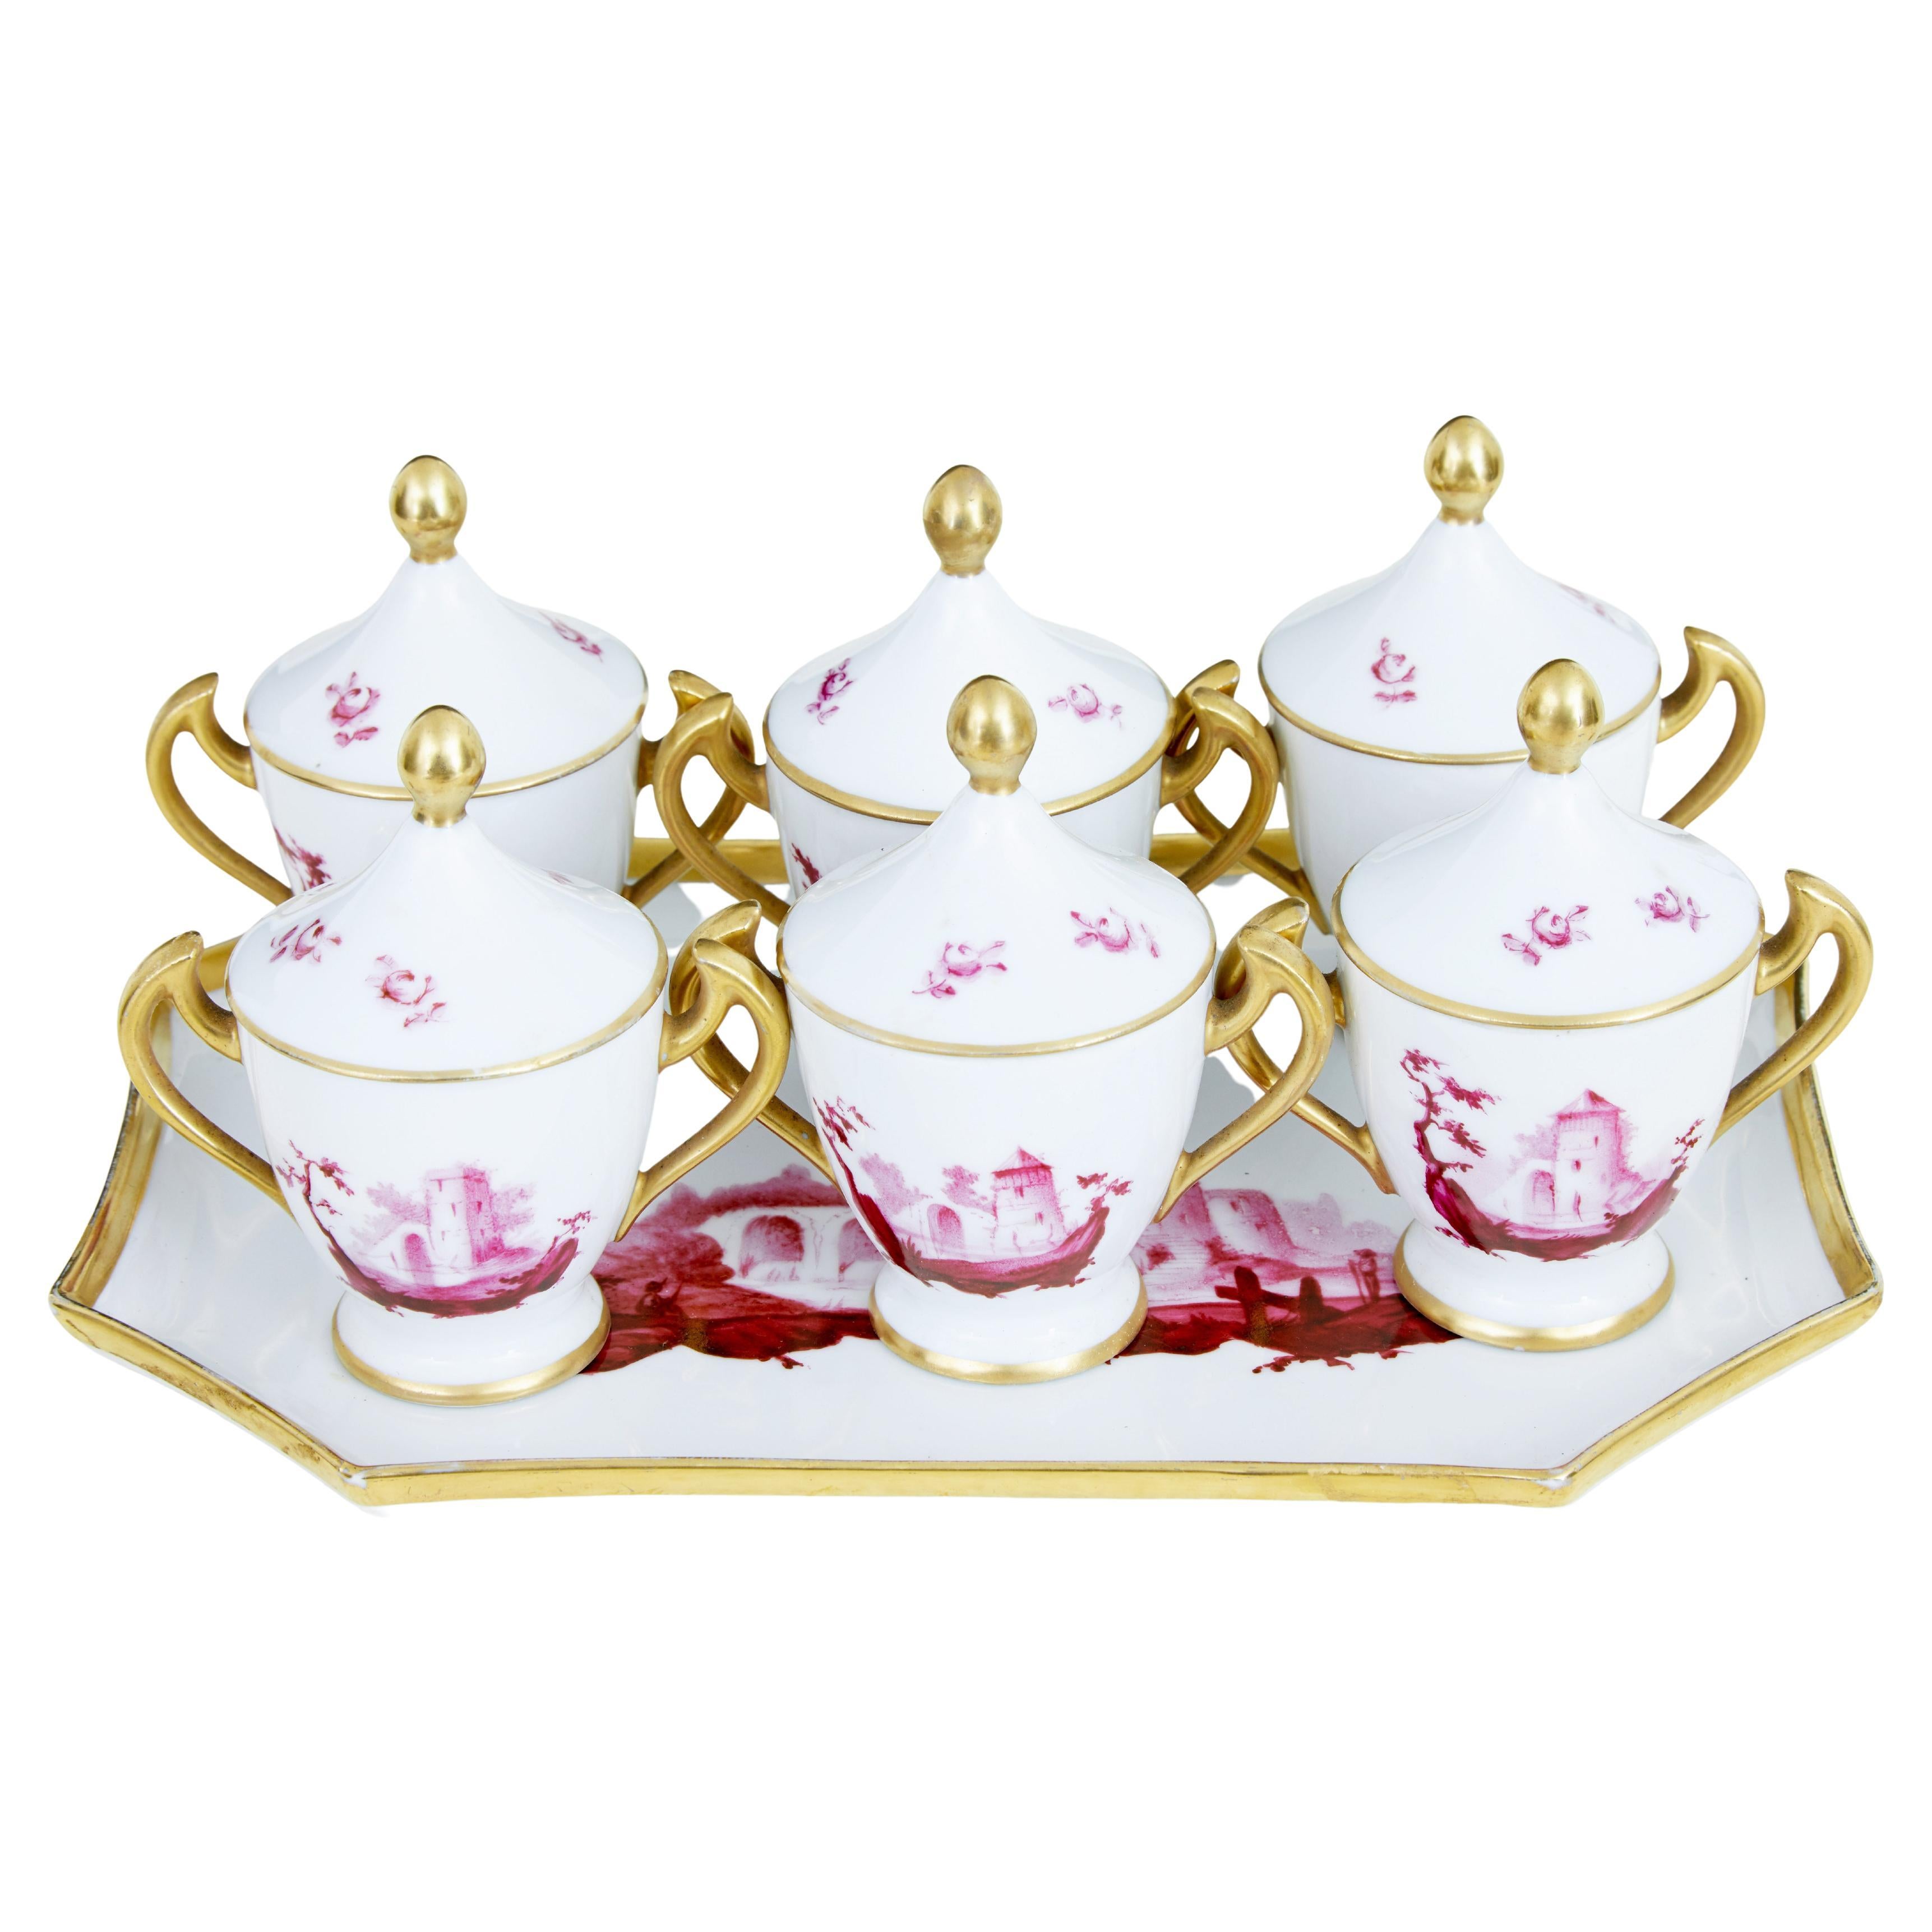 20th Century French Porcelain 7 Piece Dessert Set For Sale